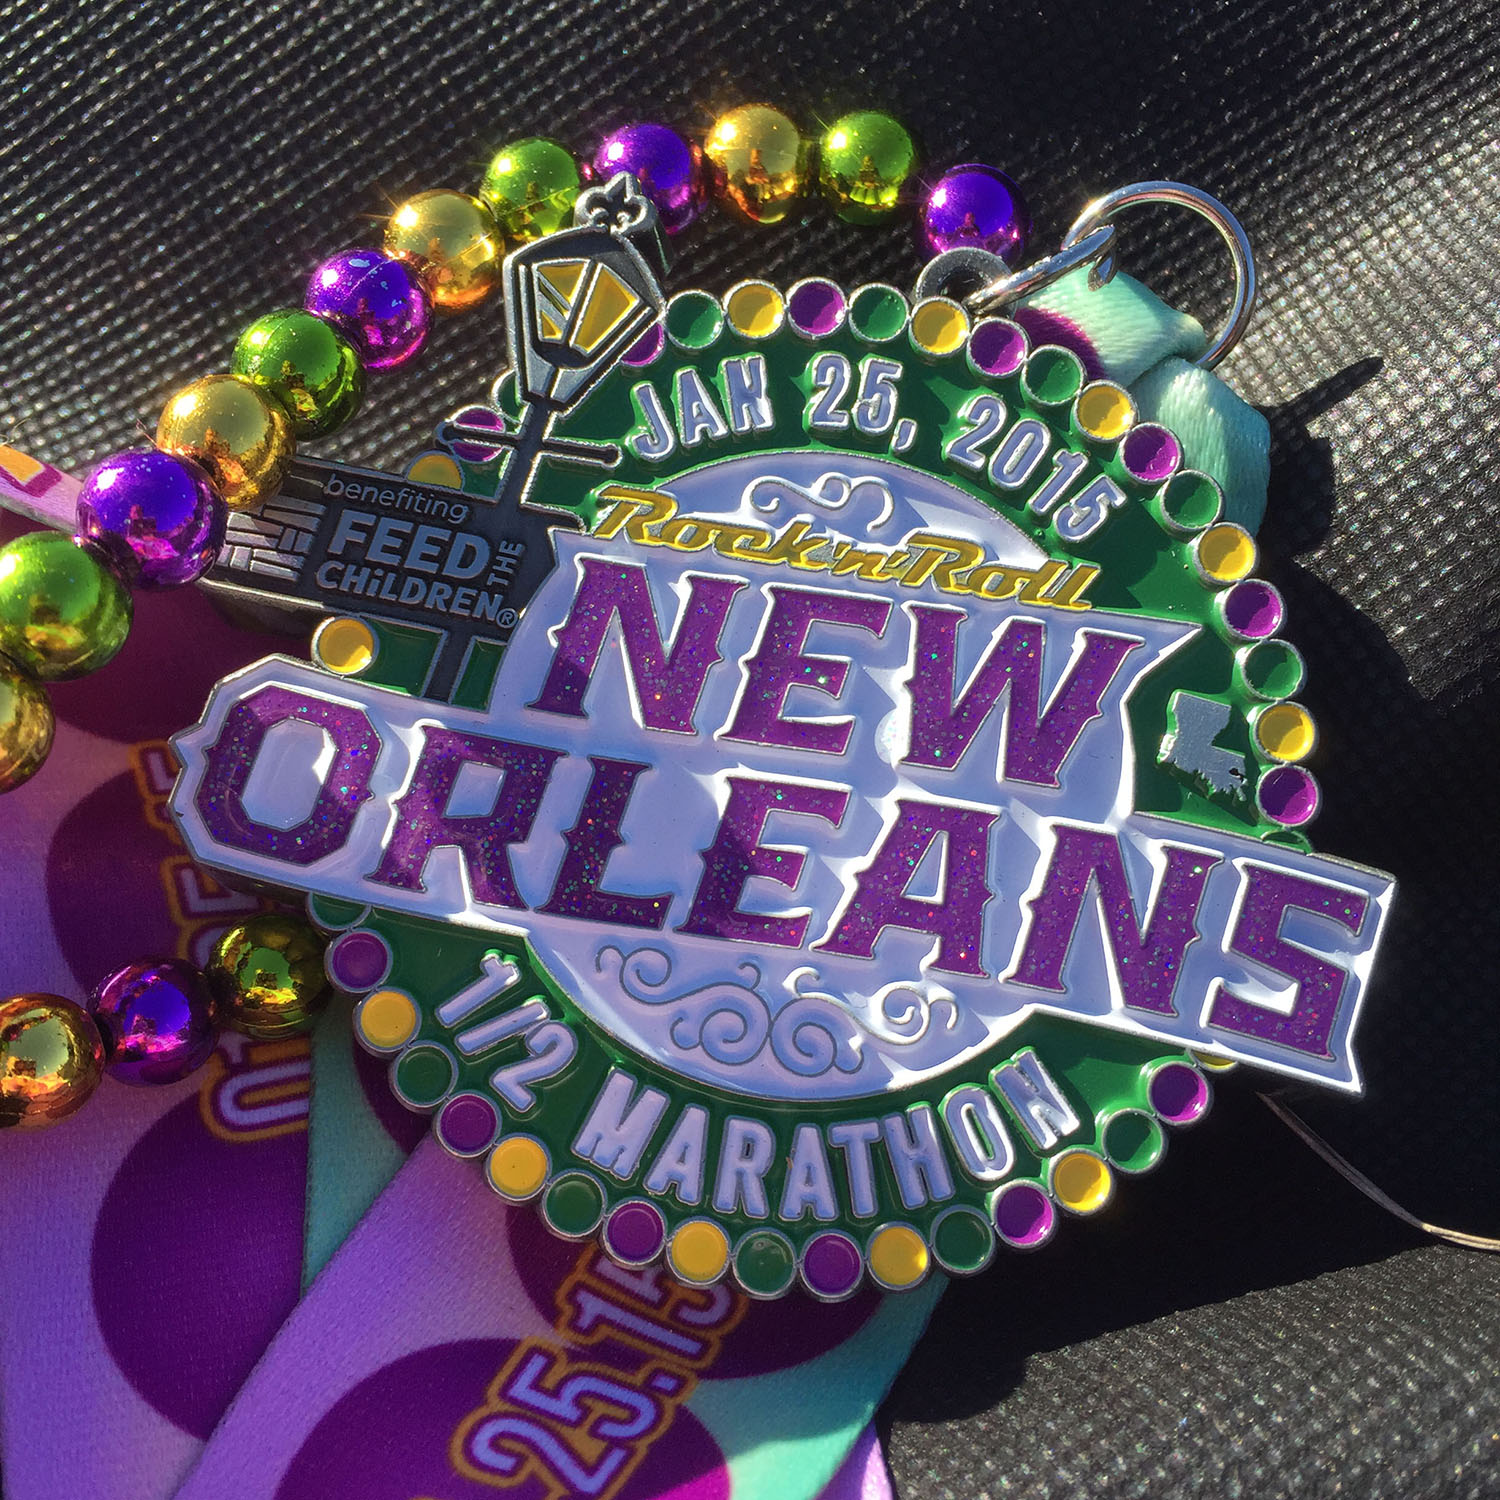 Rock 'n' Roll New Orleans half marathon medal